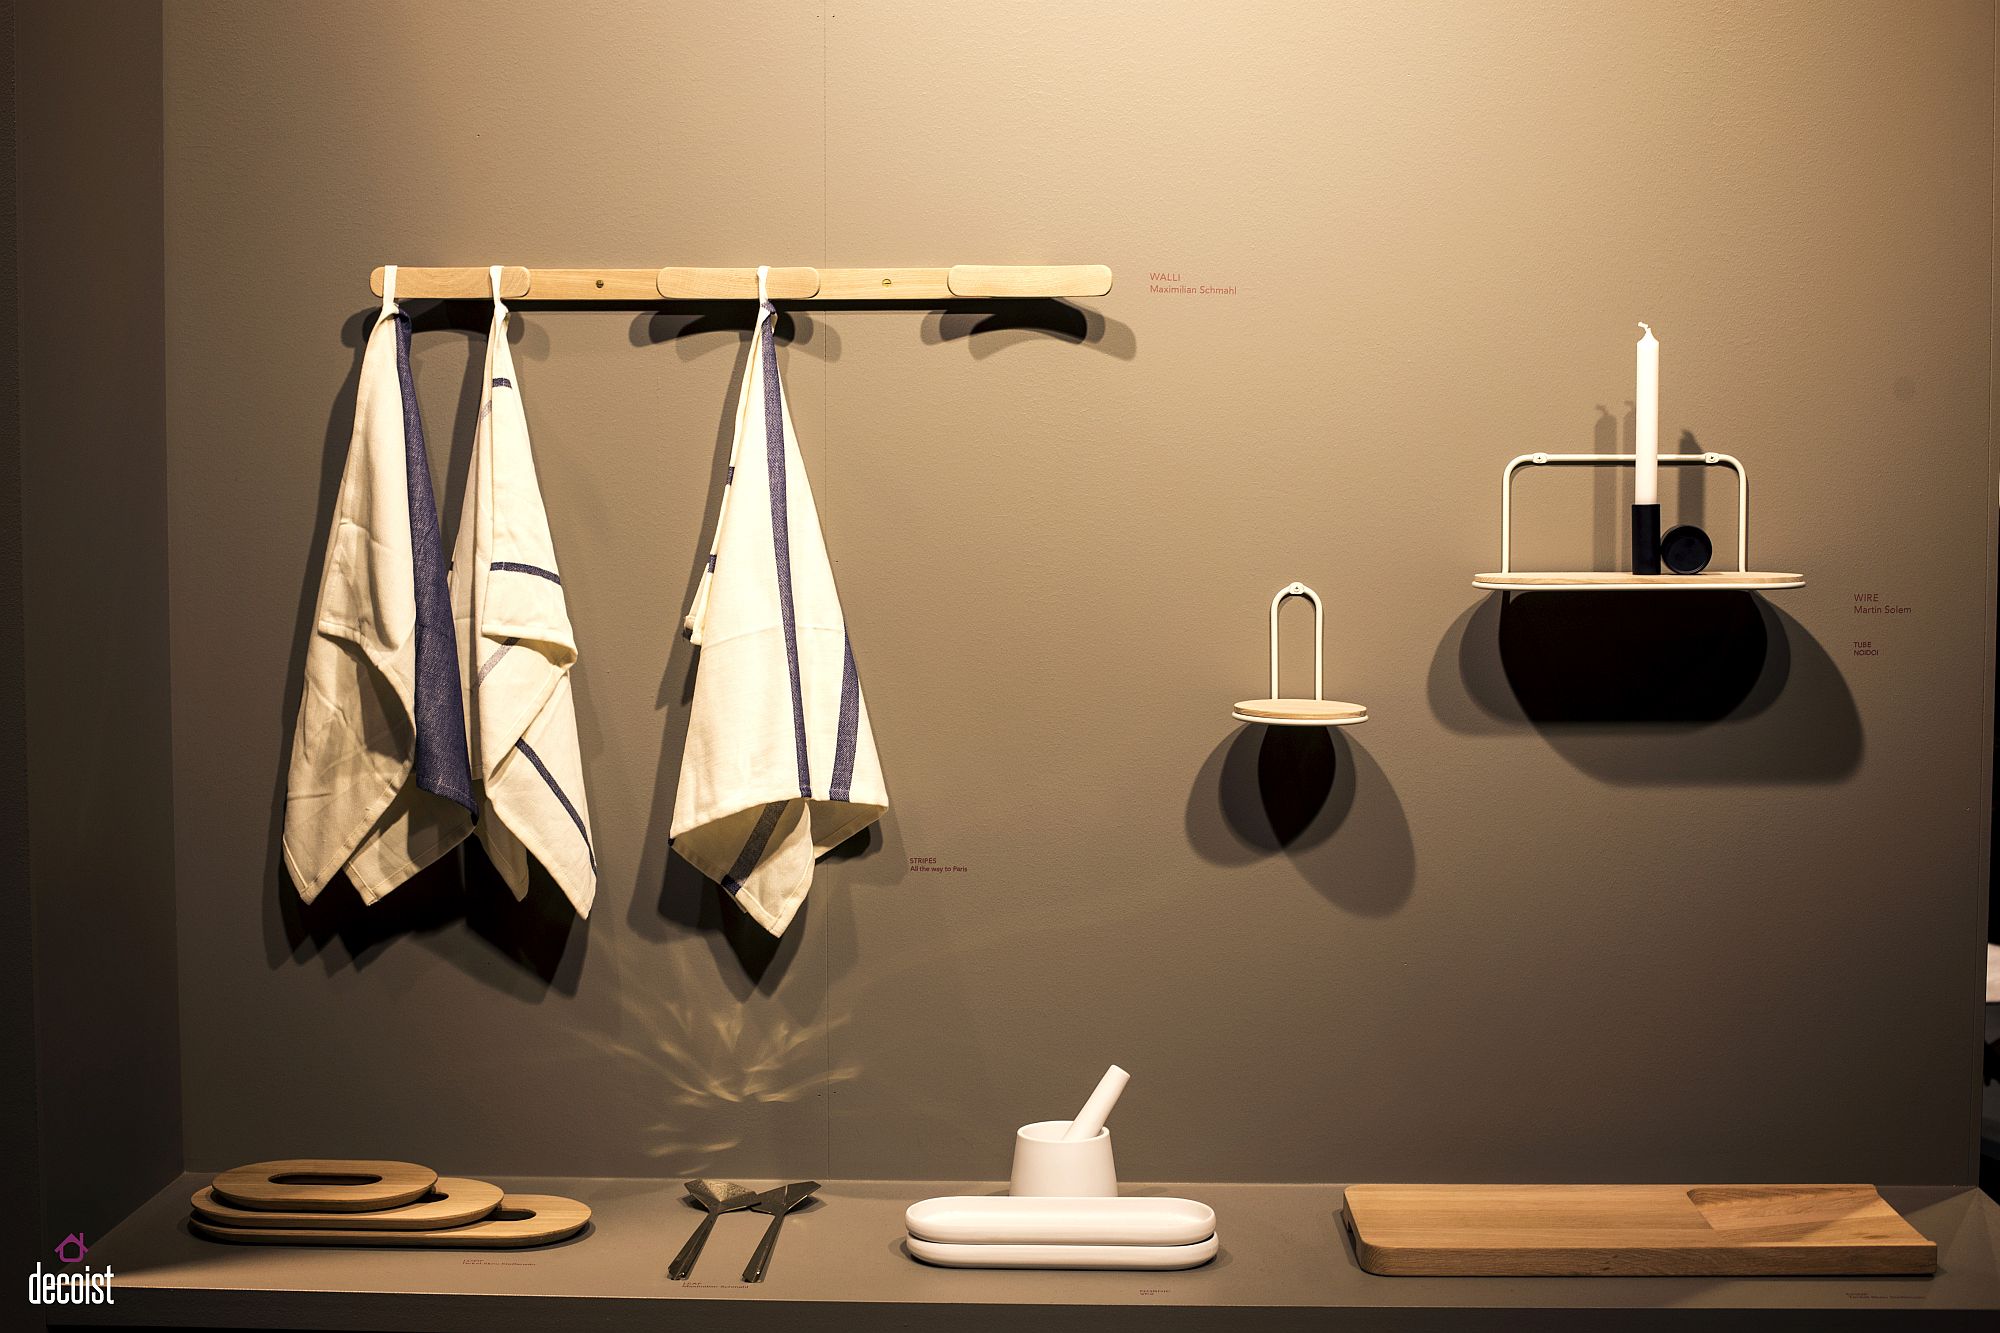 Trendy bathroom decor with Danish design from Skagerak